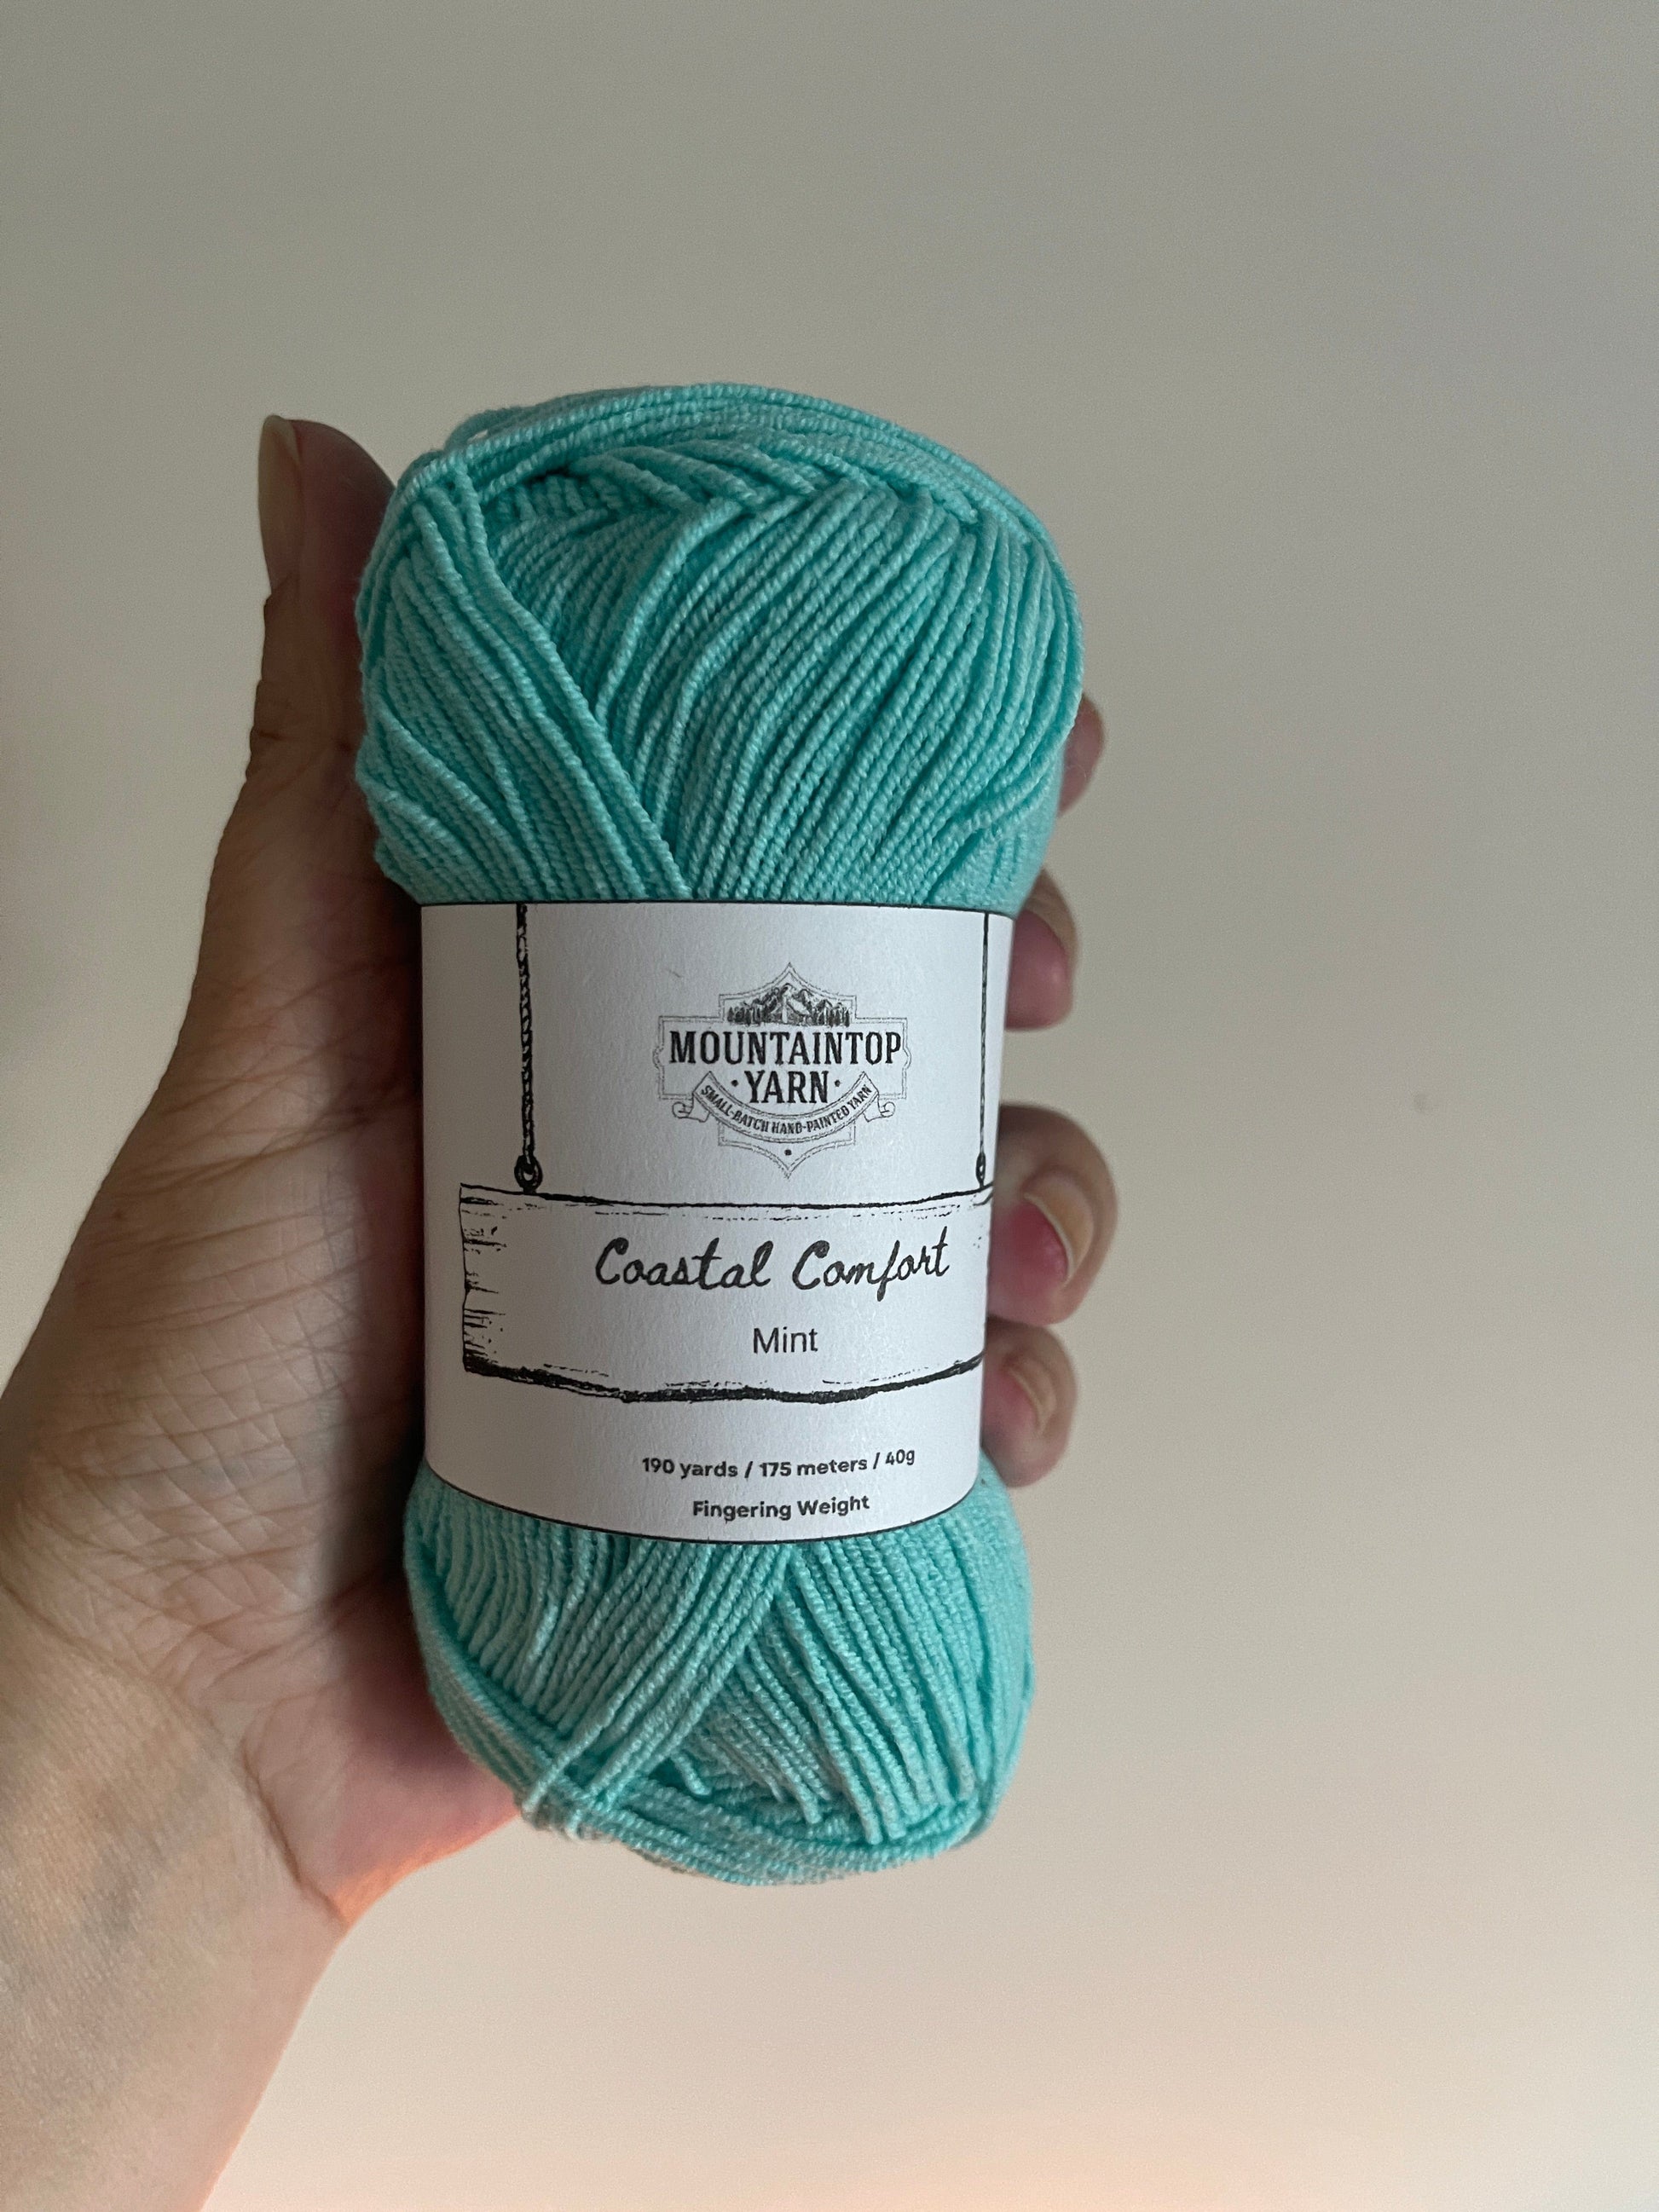 Mountaintop Yarn Mint Coastal Comfort - Cotton and Acrylic Blend Yarn Yarn